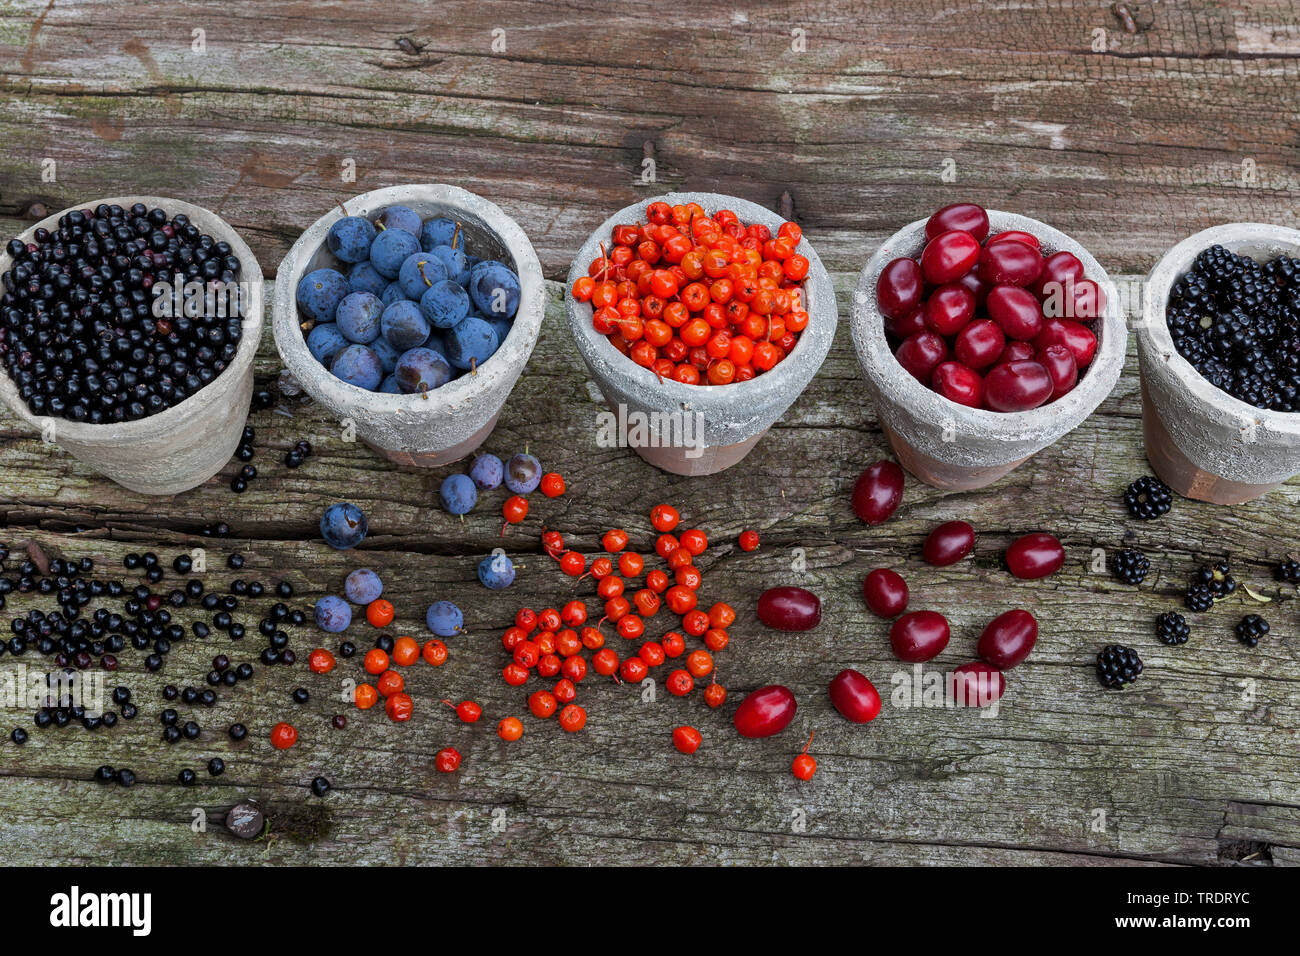 wild fruits in pots: blackthorn berries, elderberries, rowan tree berries, cornelian cherry wood berries and blackberries, Germany Stock Photo